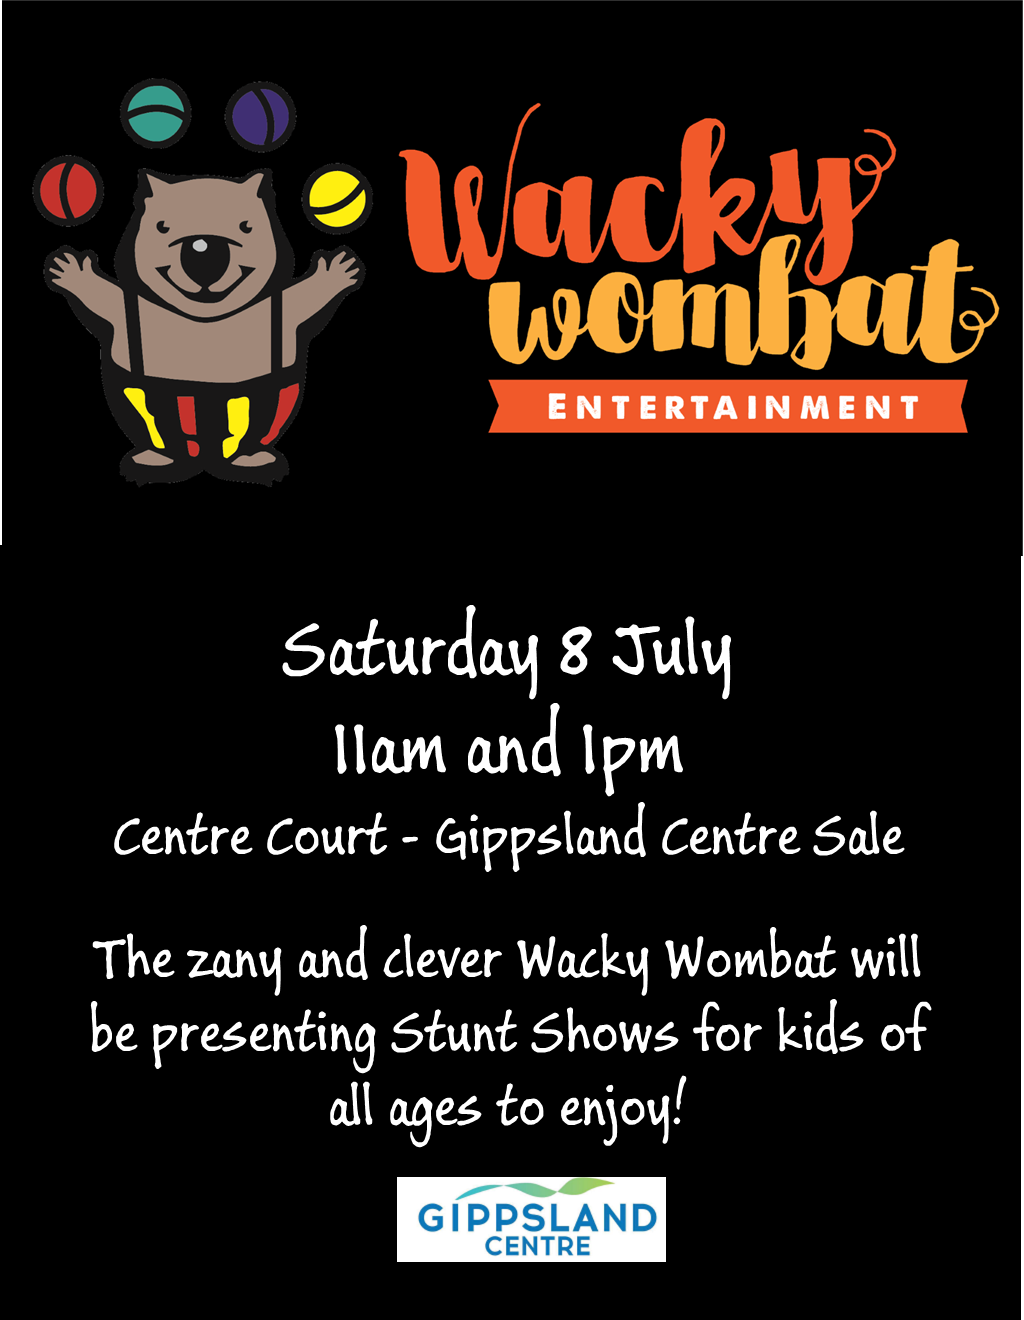 Wacky wombat